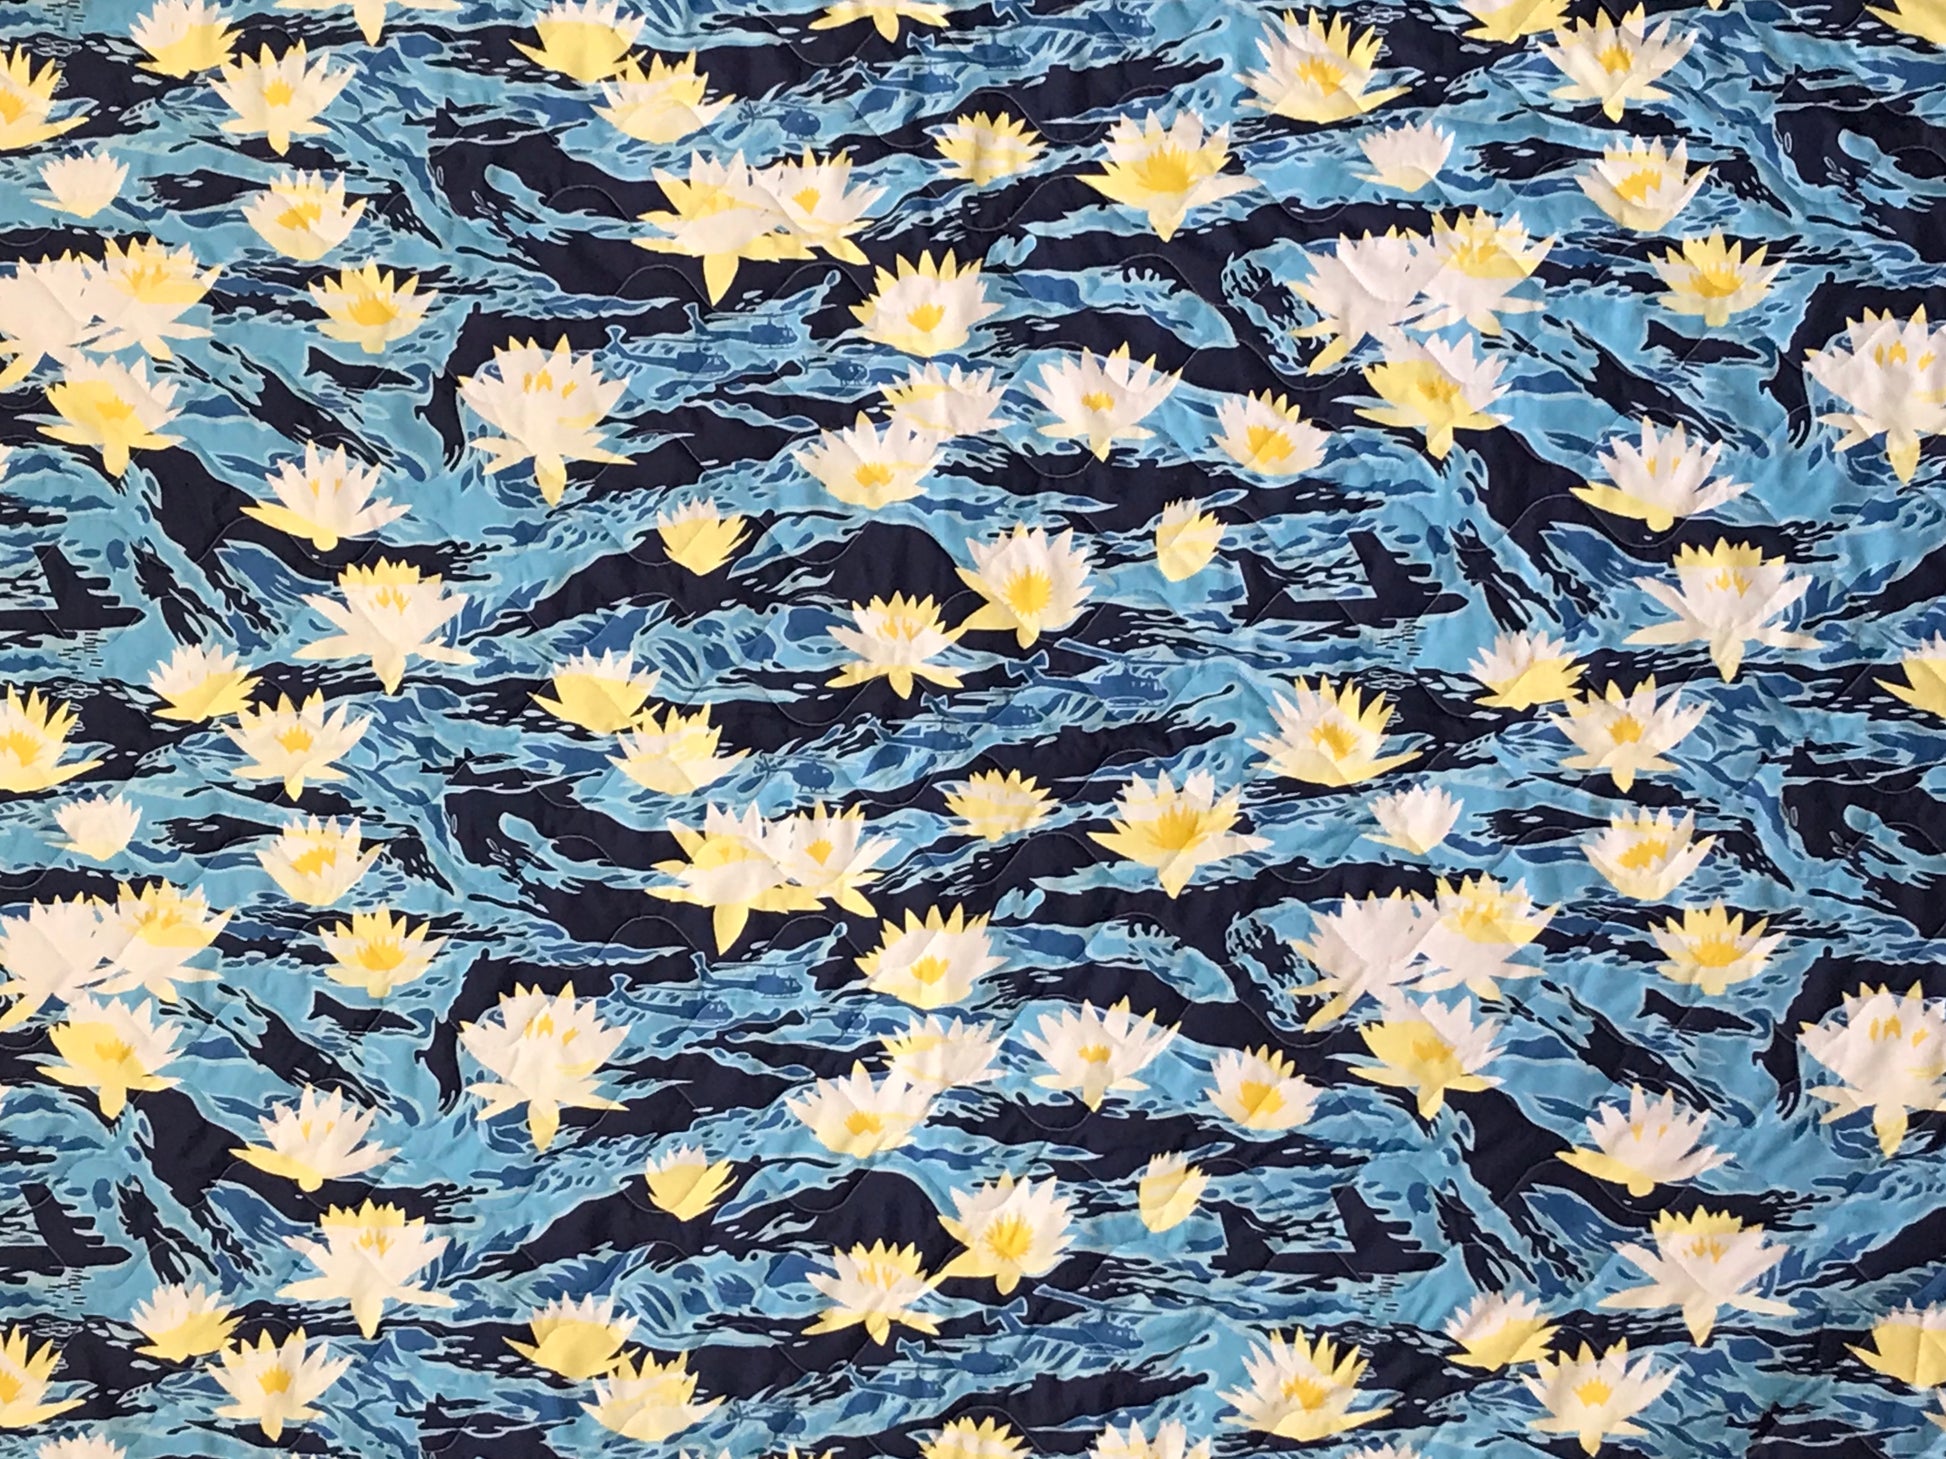 Woobie USA Throw Blanket - Aloha Now - Blue - Bawidamann Art